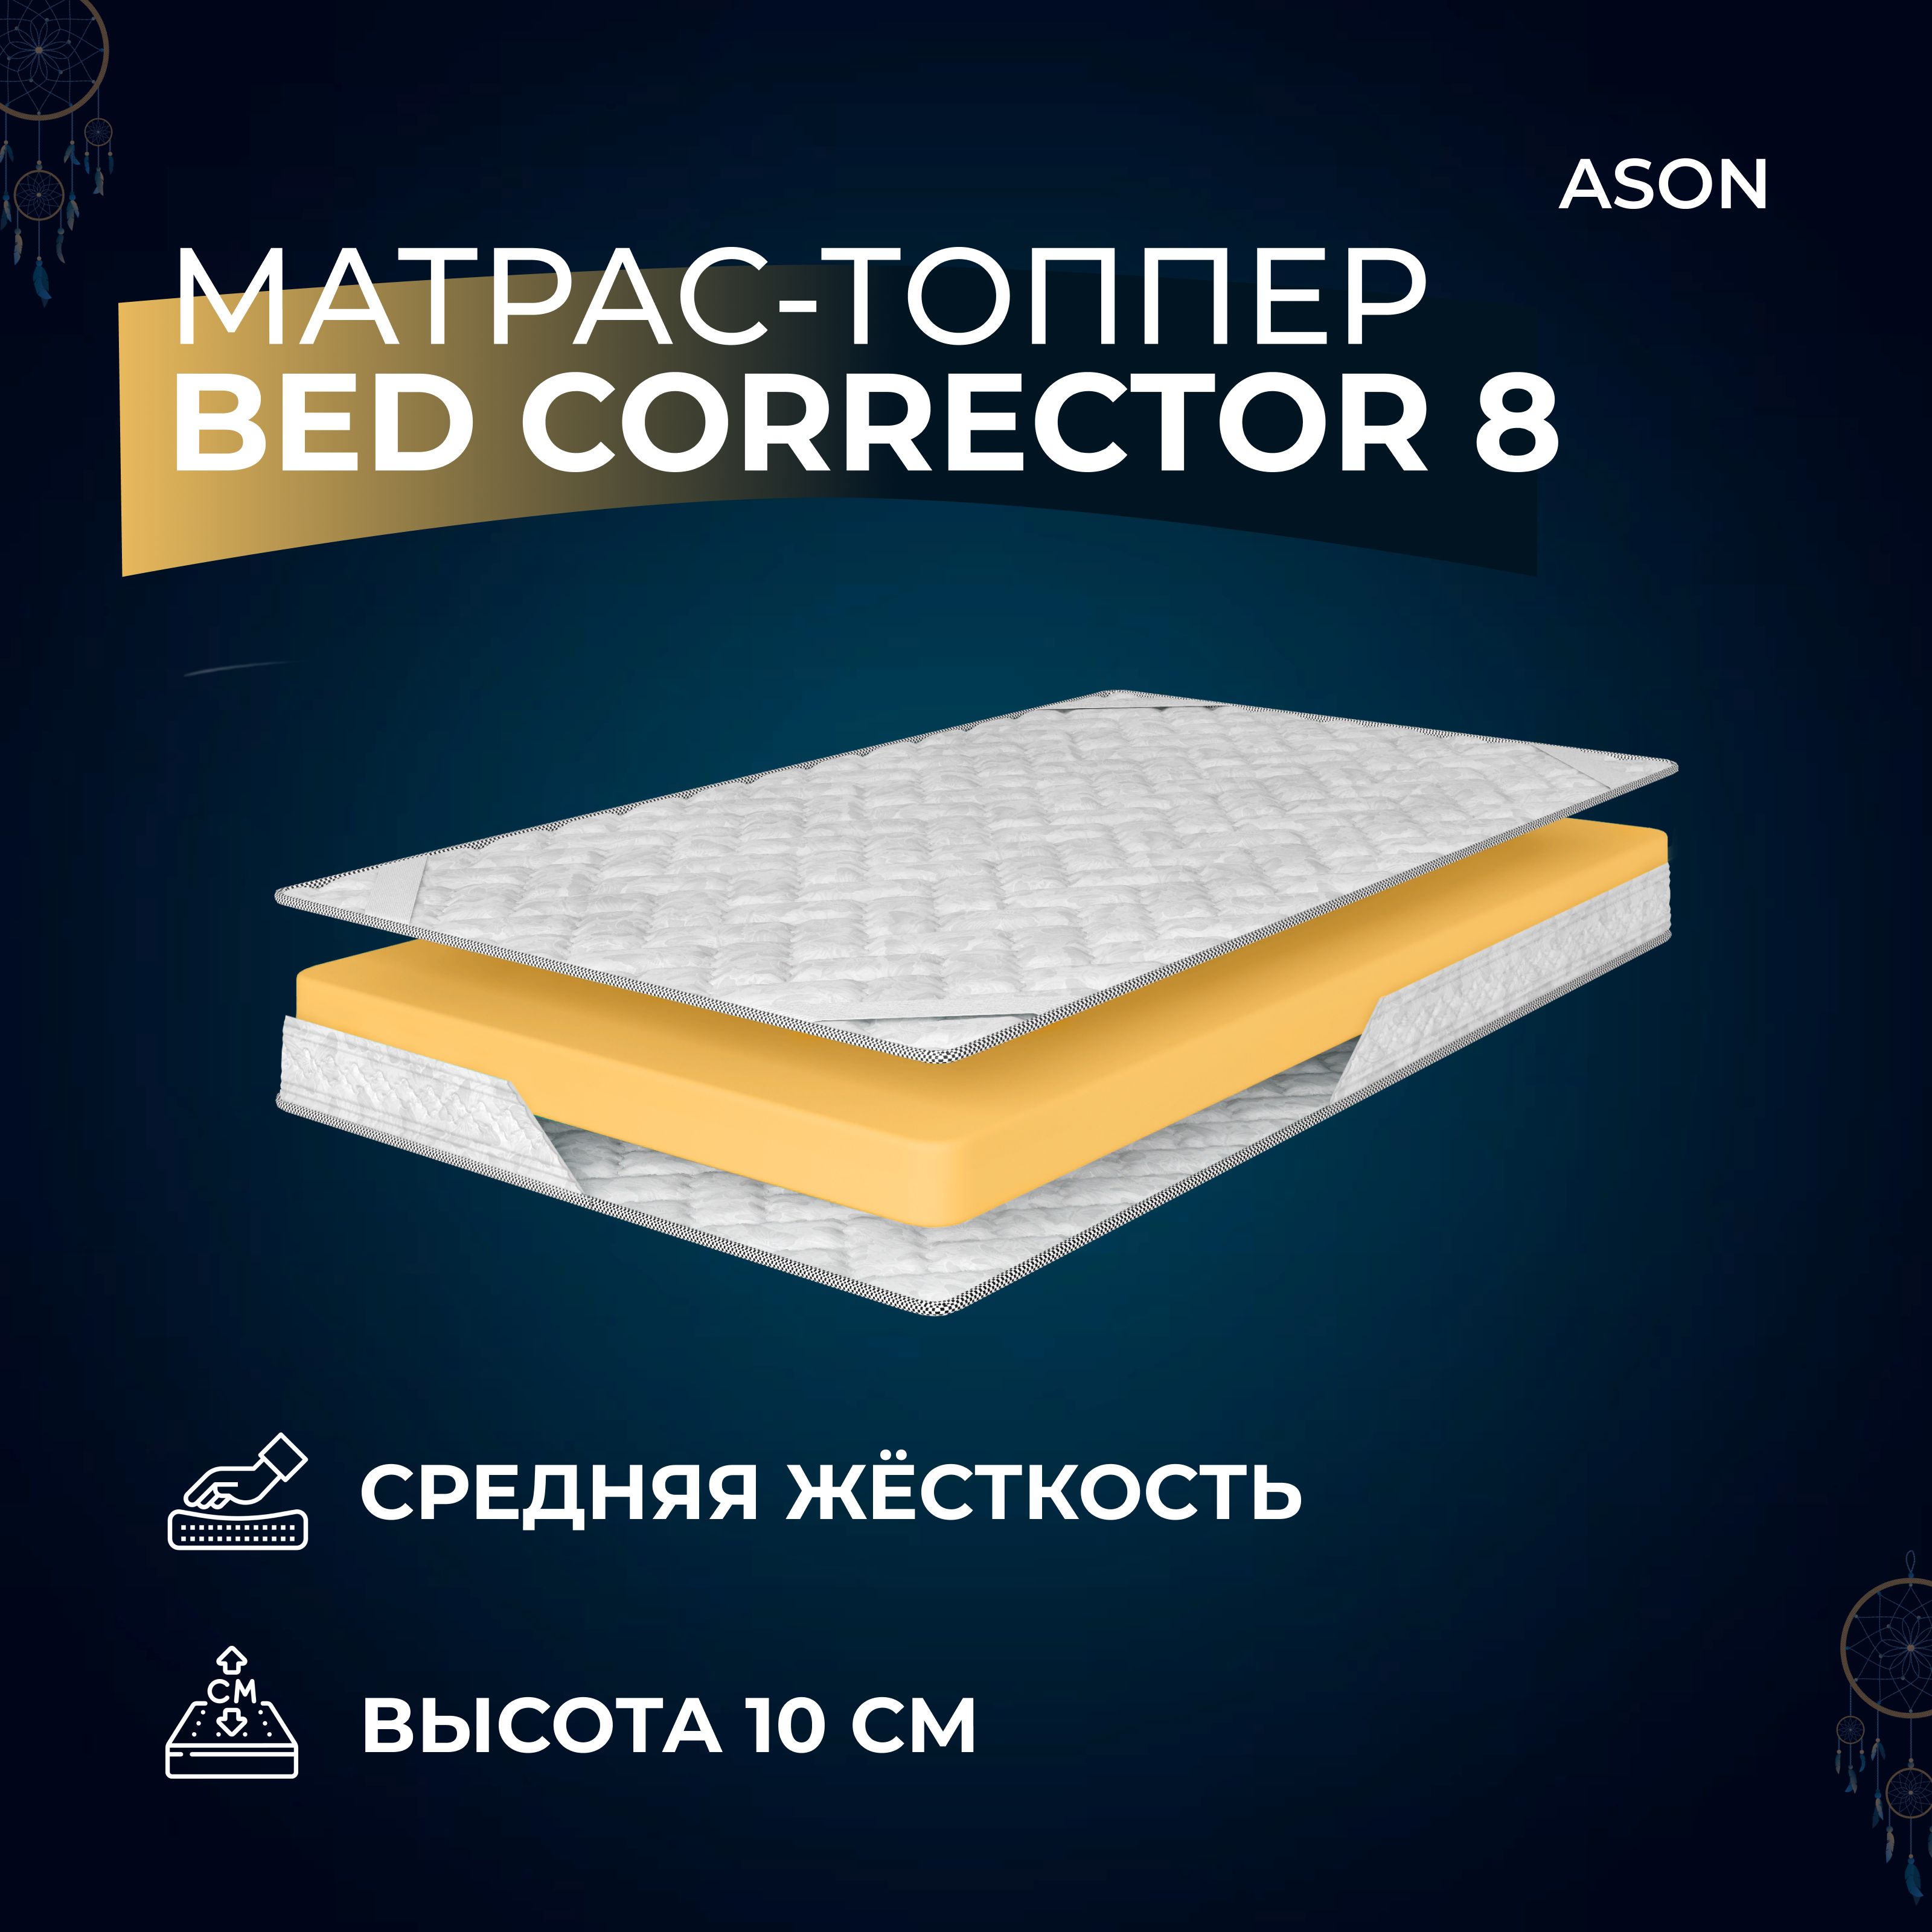 Матрас-топпер 140х195 Ason, Bed corrector 8